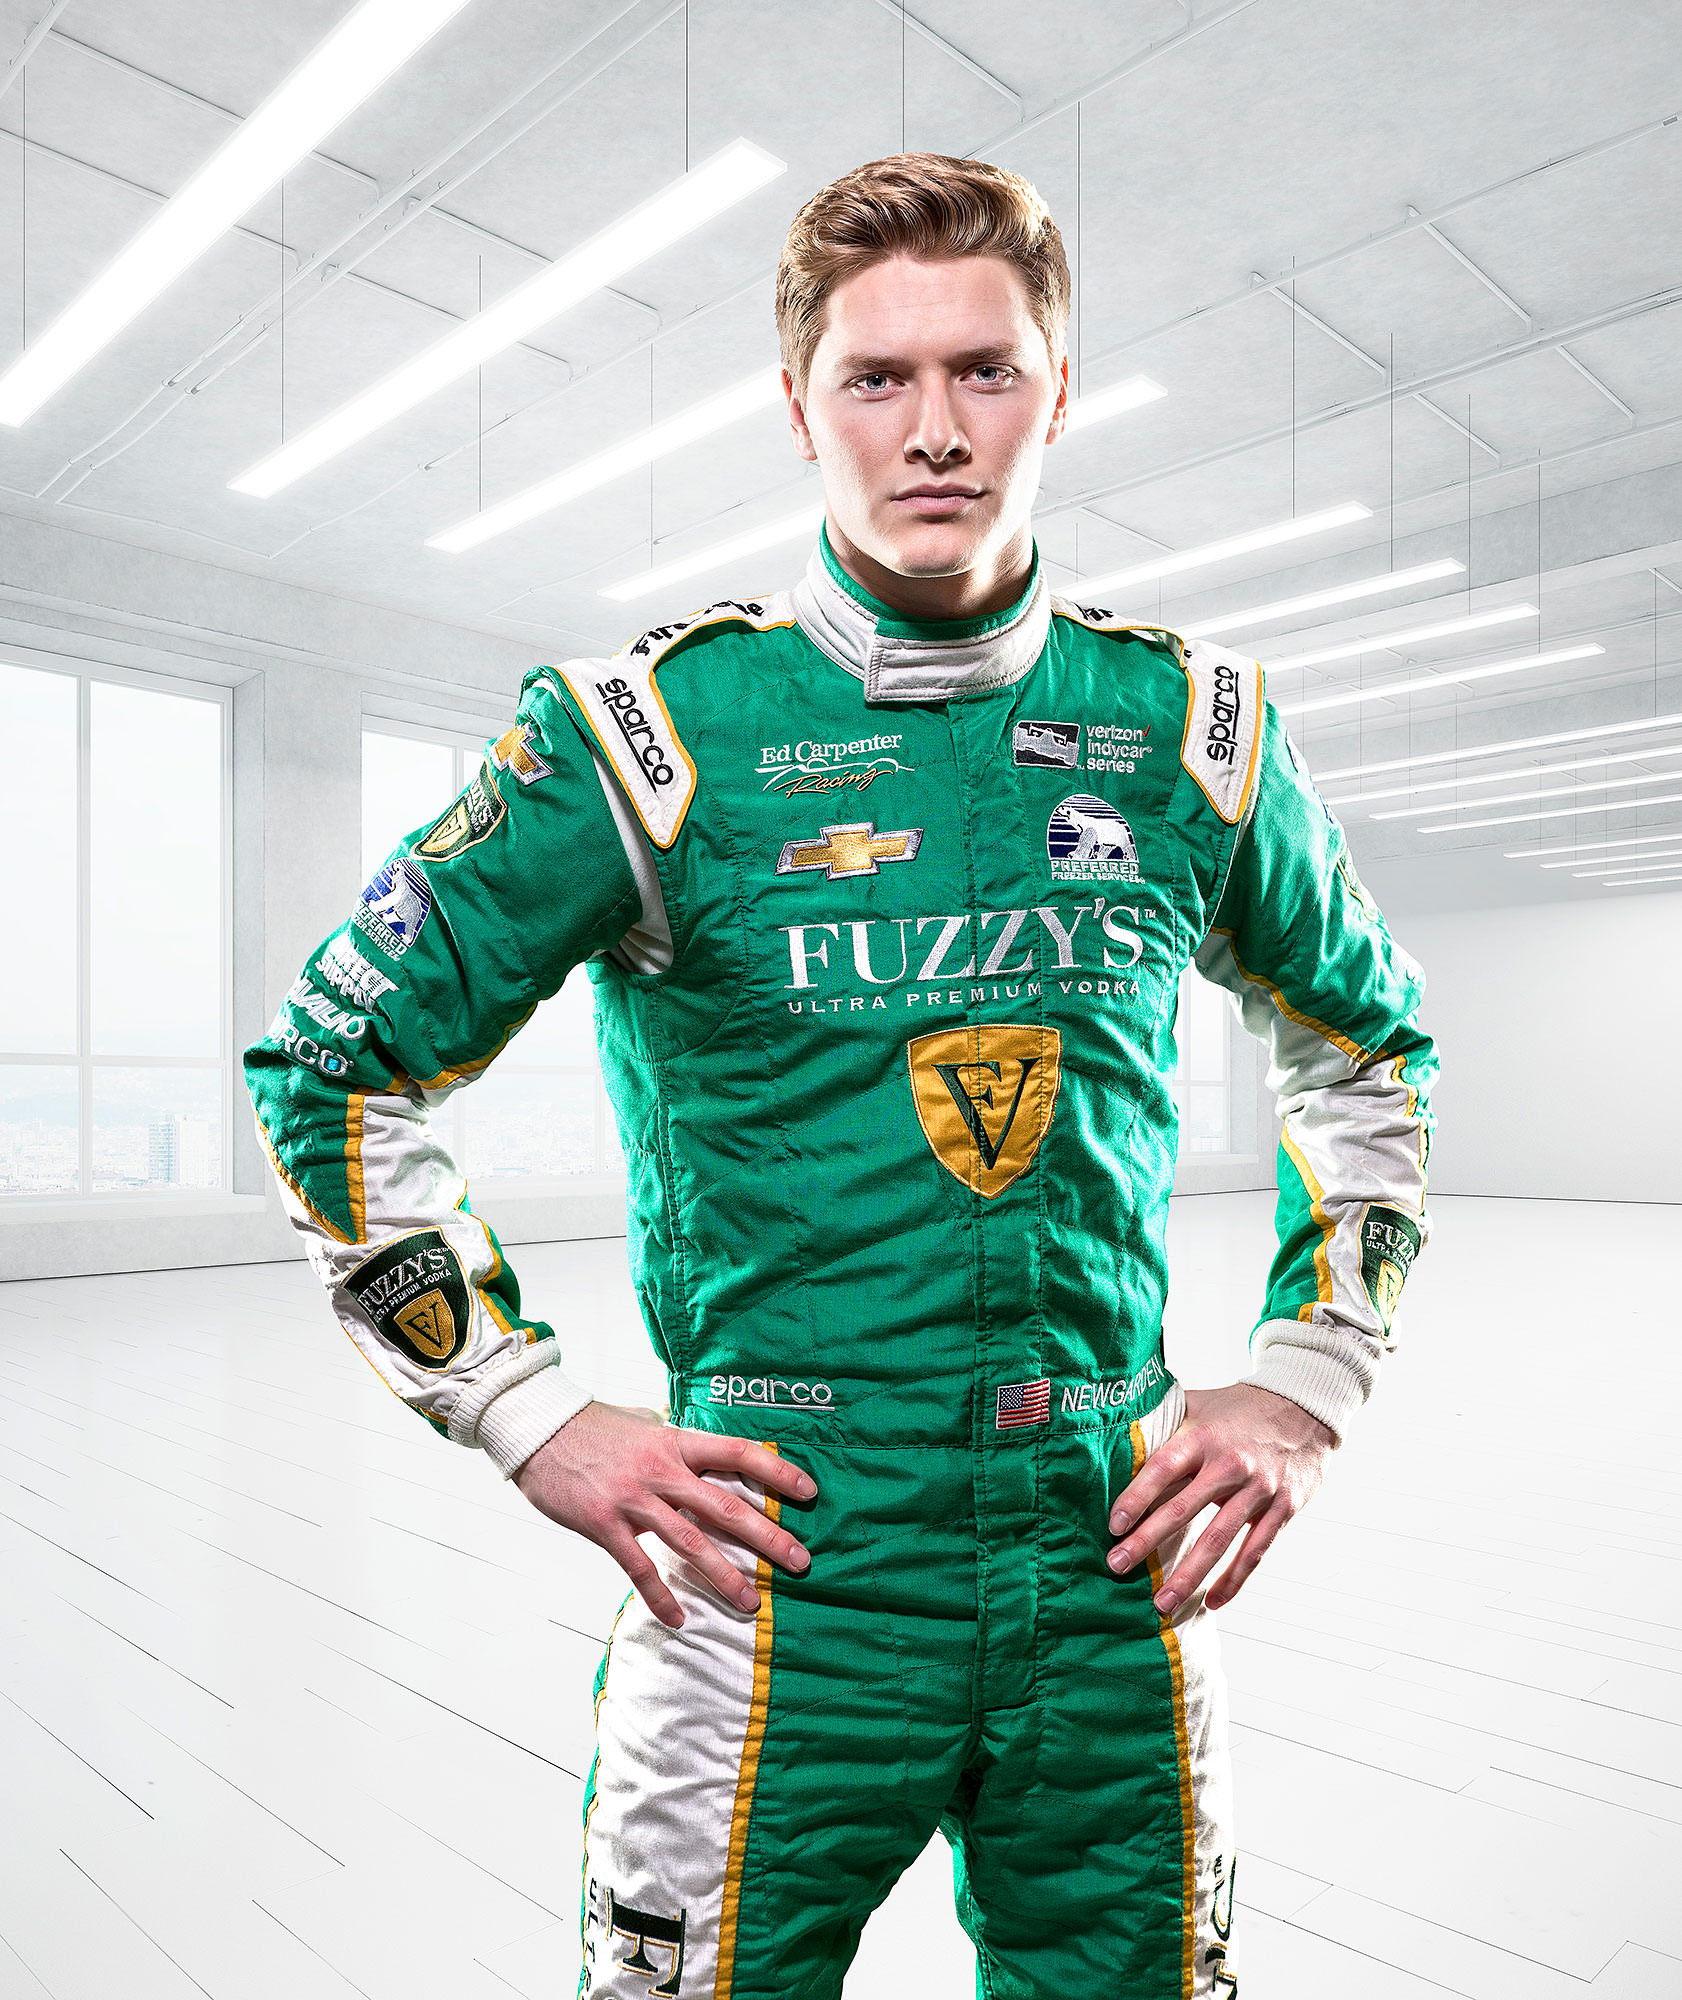 Josef Newgarden racecar driver for Fuzzy